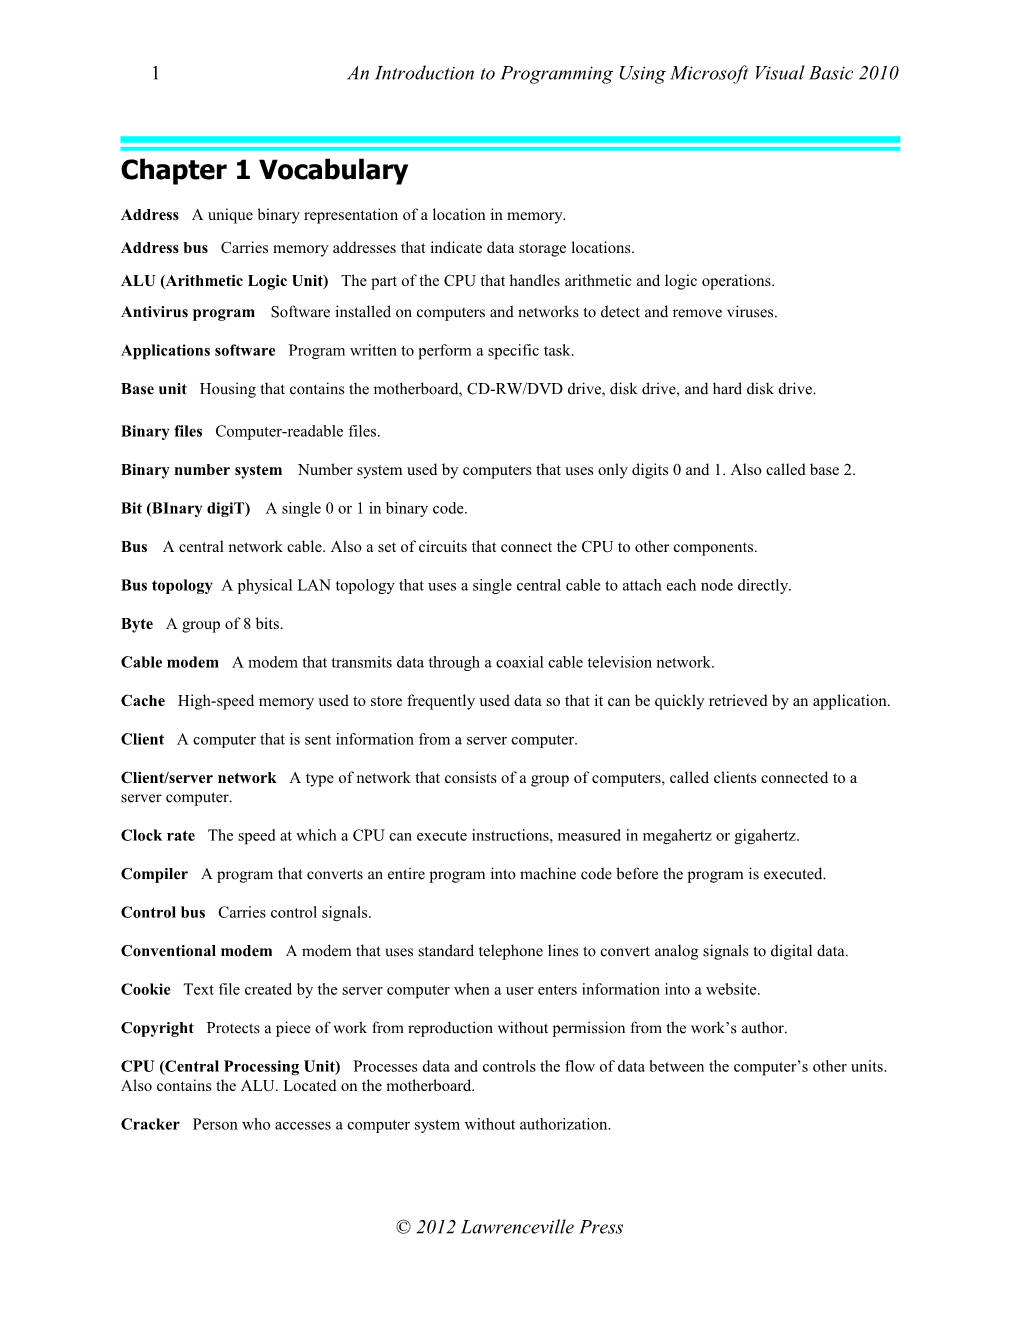 Visual Basic 2005 Chapter 1 Vocabulary